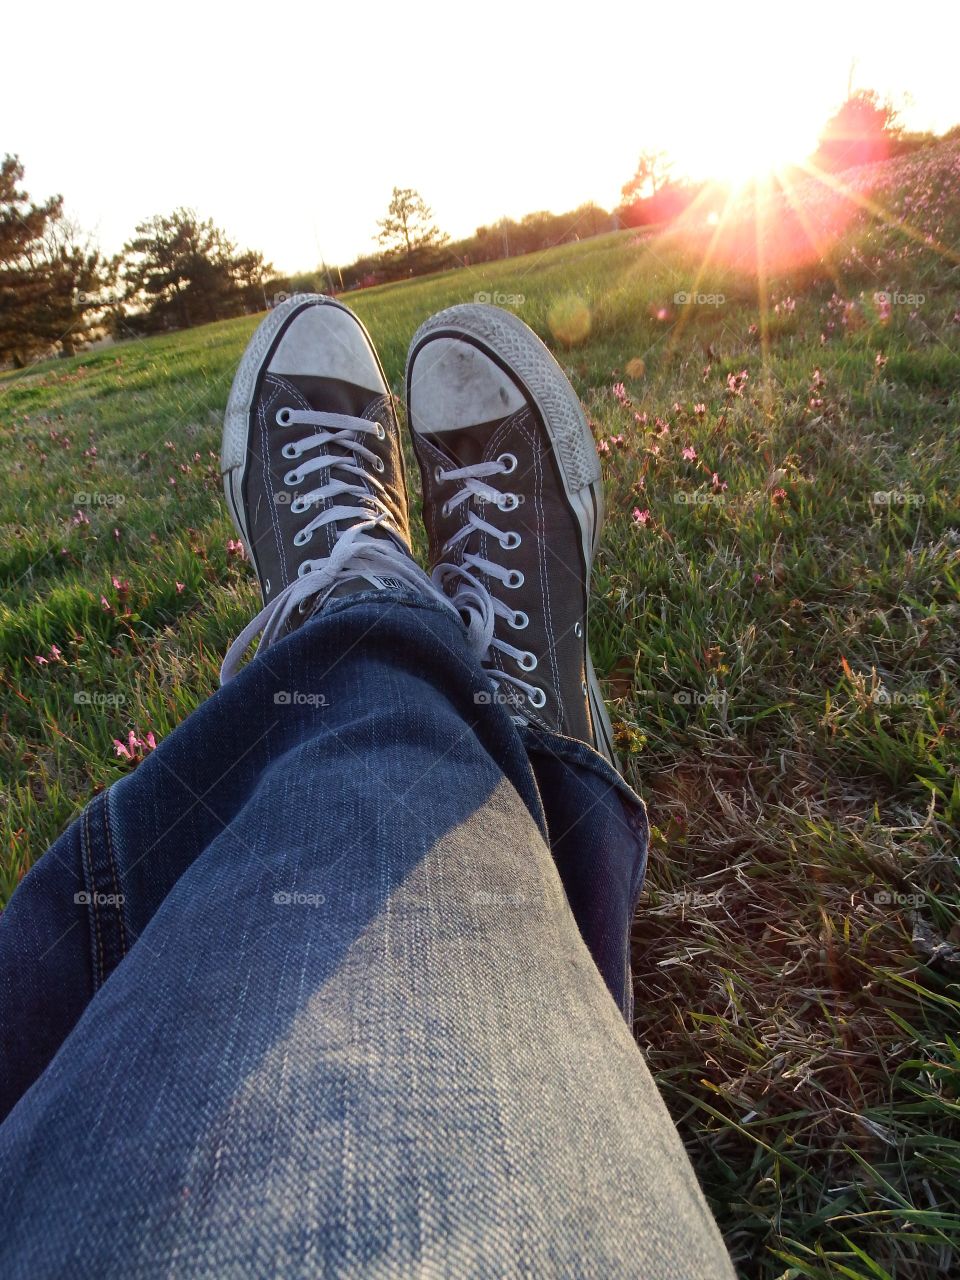 Close-up of human's leg sitting on grassy field